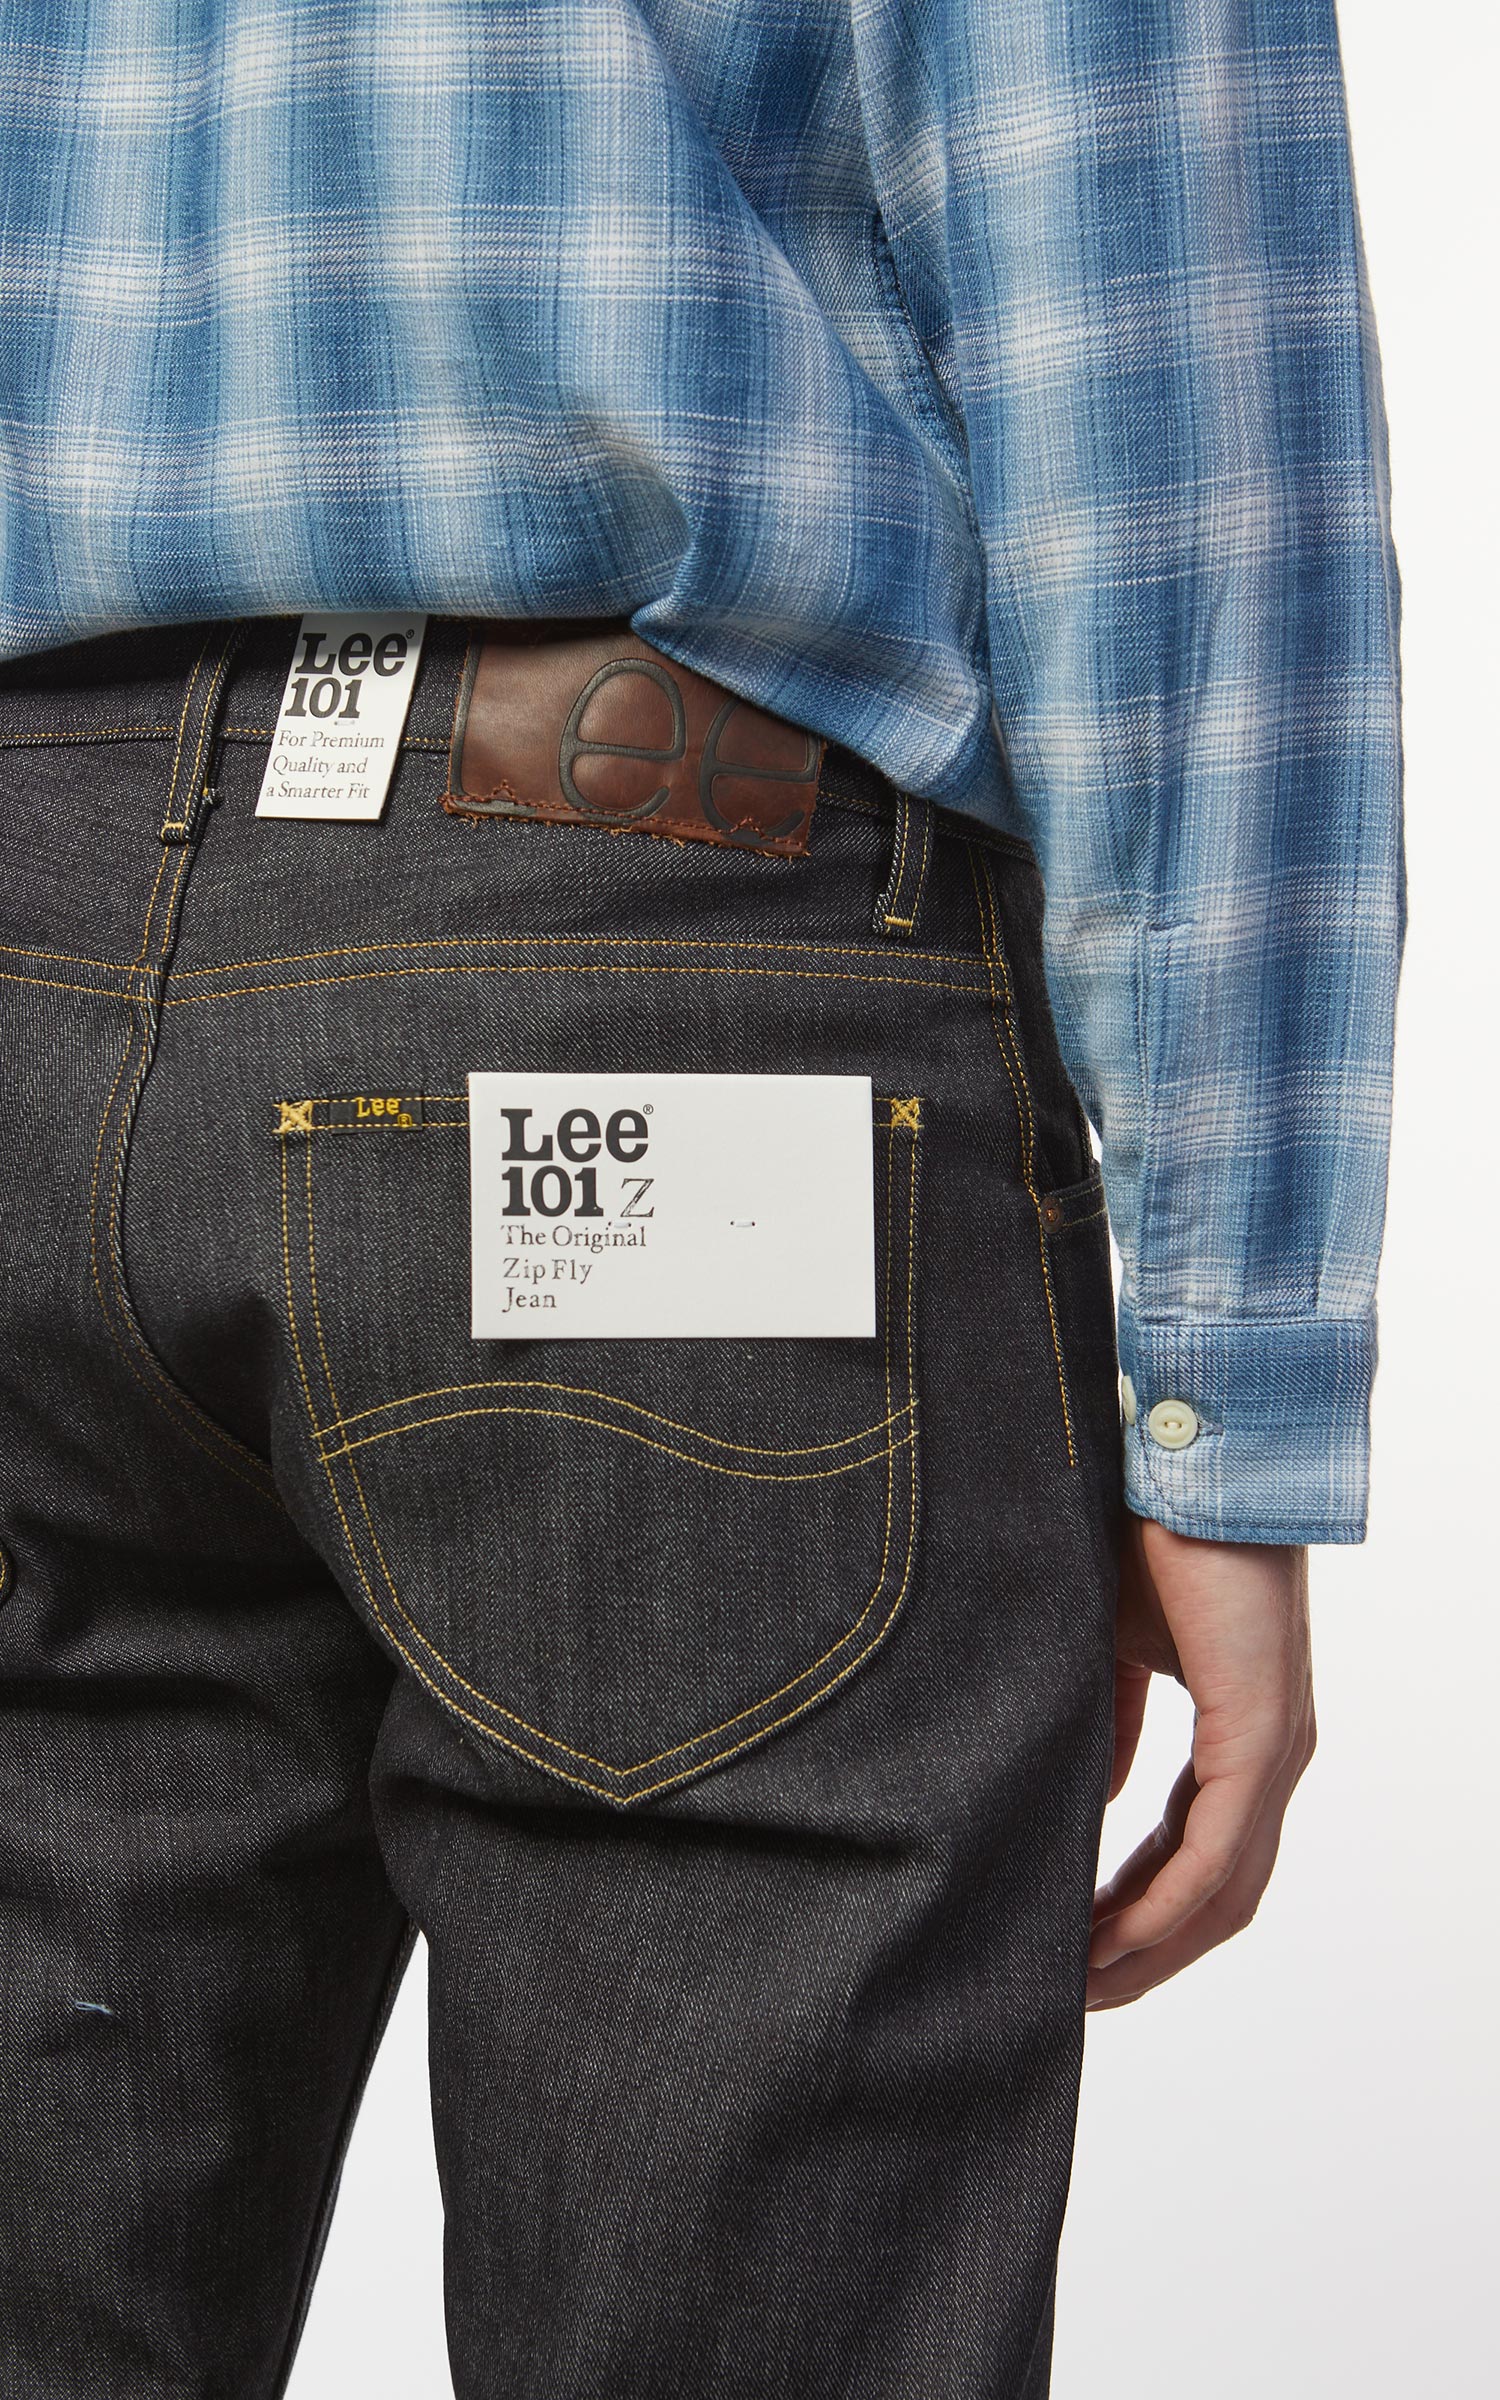 Lee 101 101 Z Jeans Dry Indigo Selvage 13.75oz | Cultizm